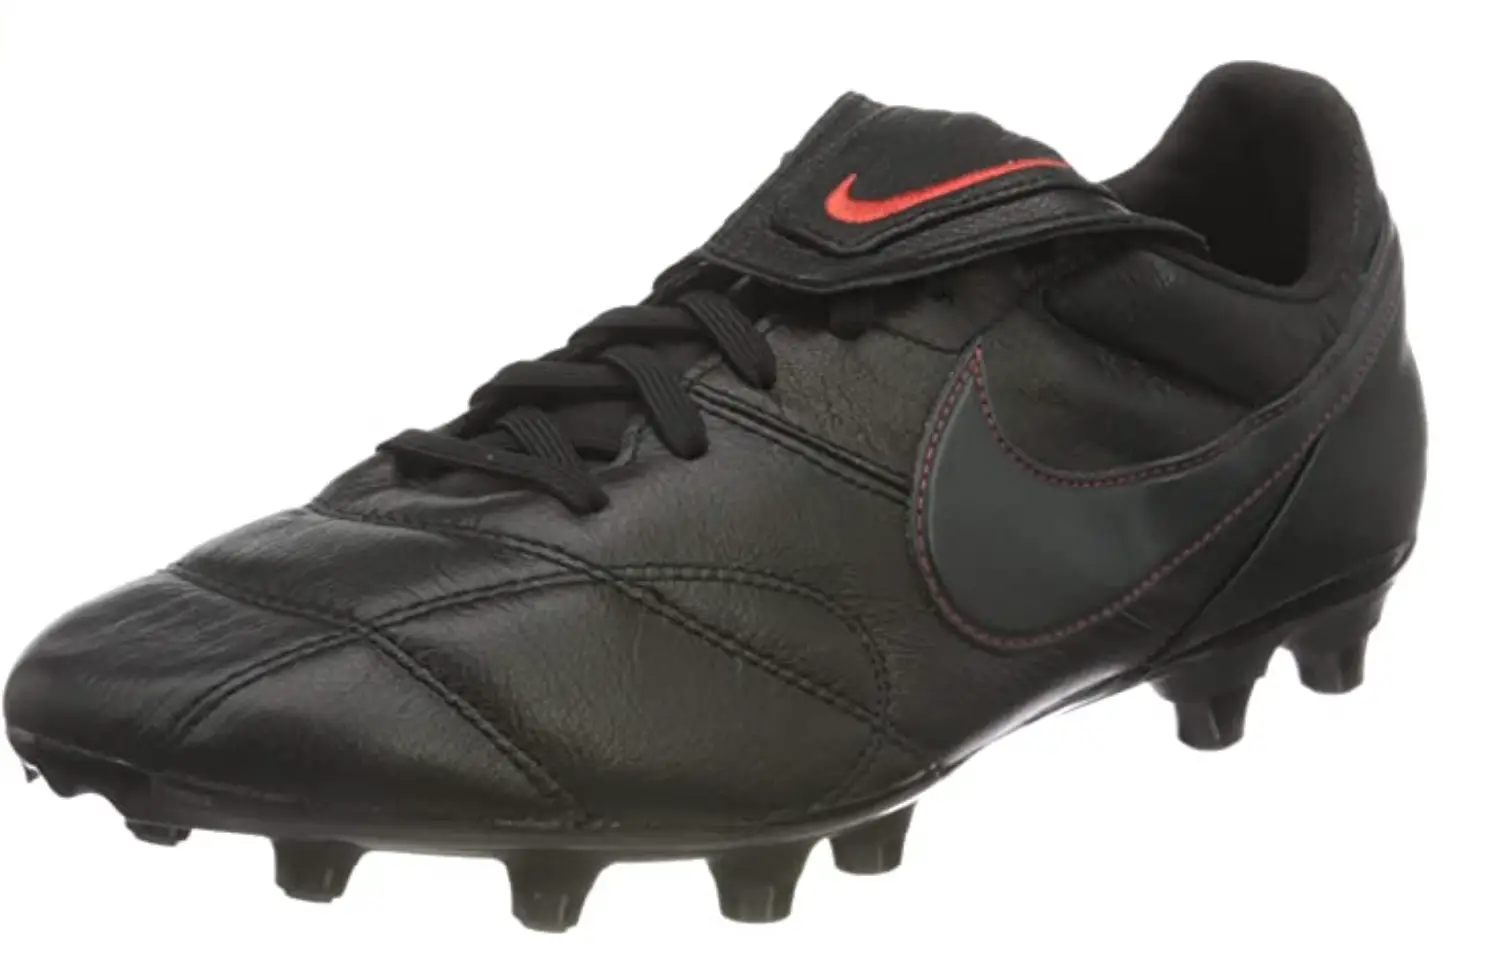 Nike Premier football boots in UAE